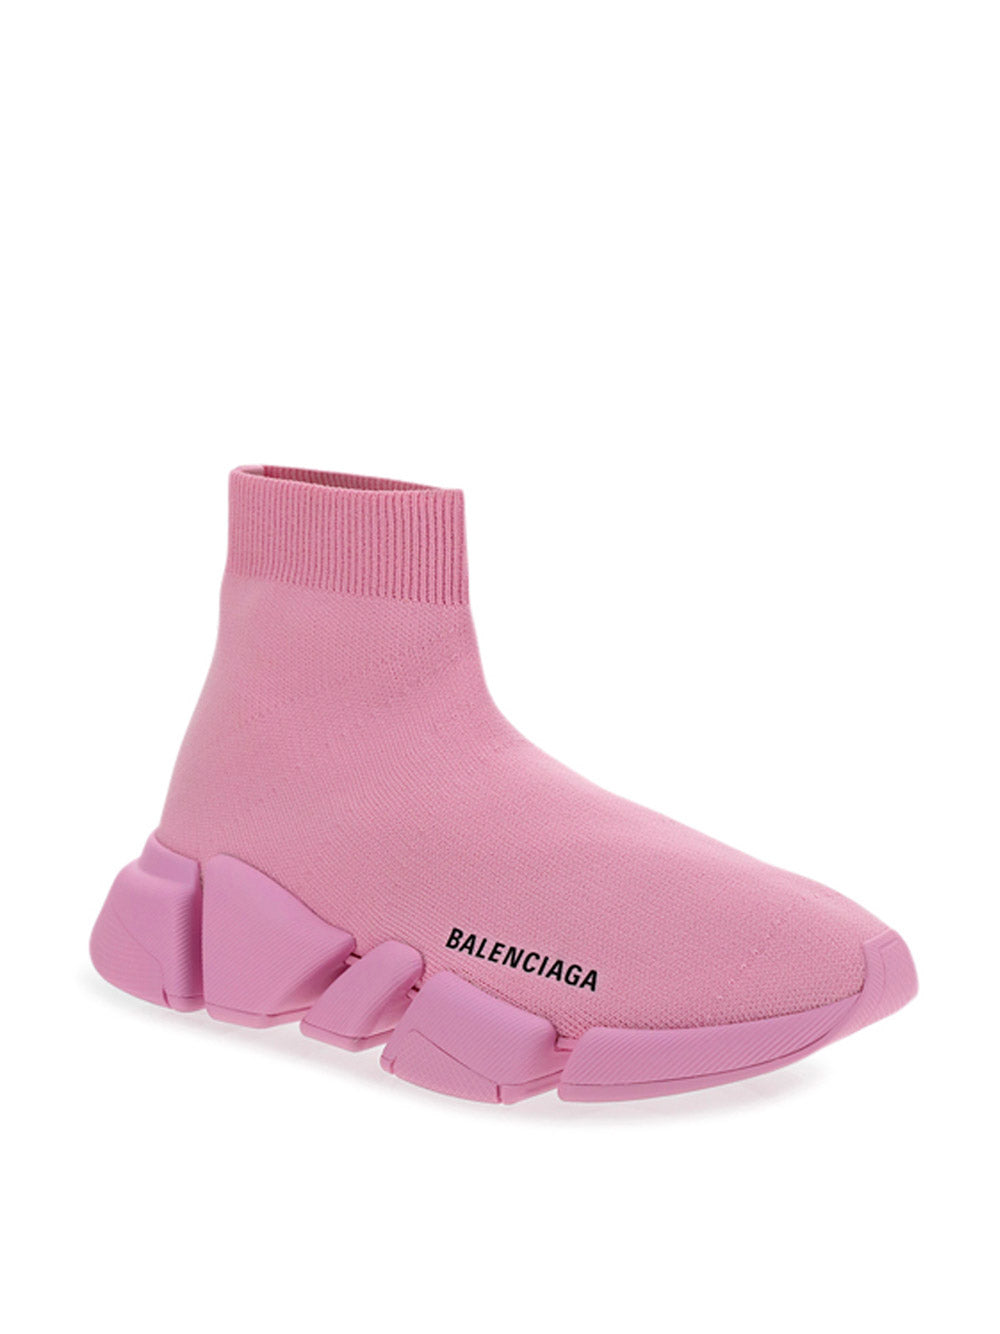 Speed Sneakers - Light Pink